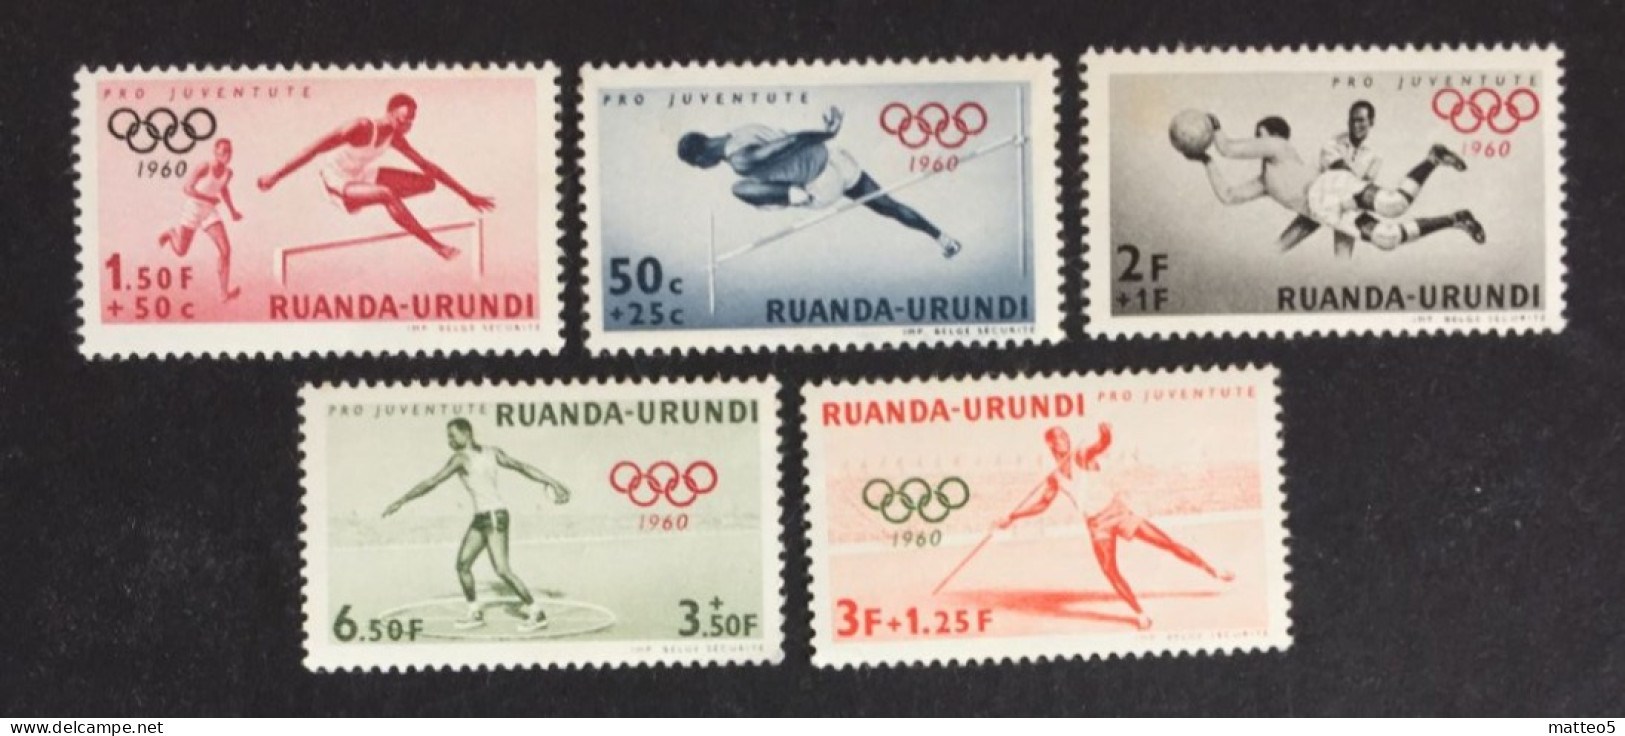 1960 - Rwanda Urundi - Summer Olympic Games 1960 - Rome - 5 Stamps Unused - Nuovi